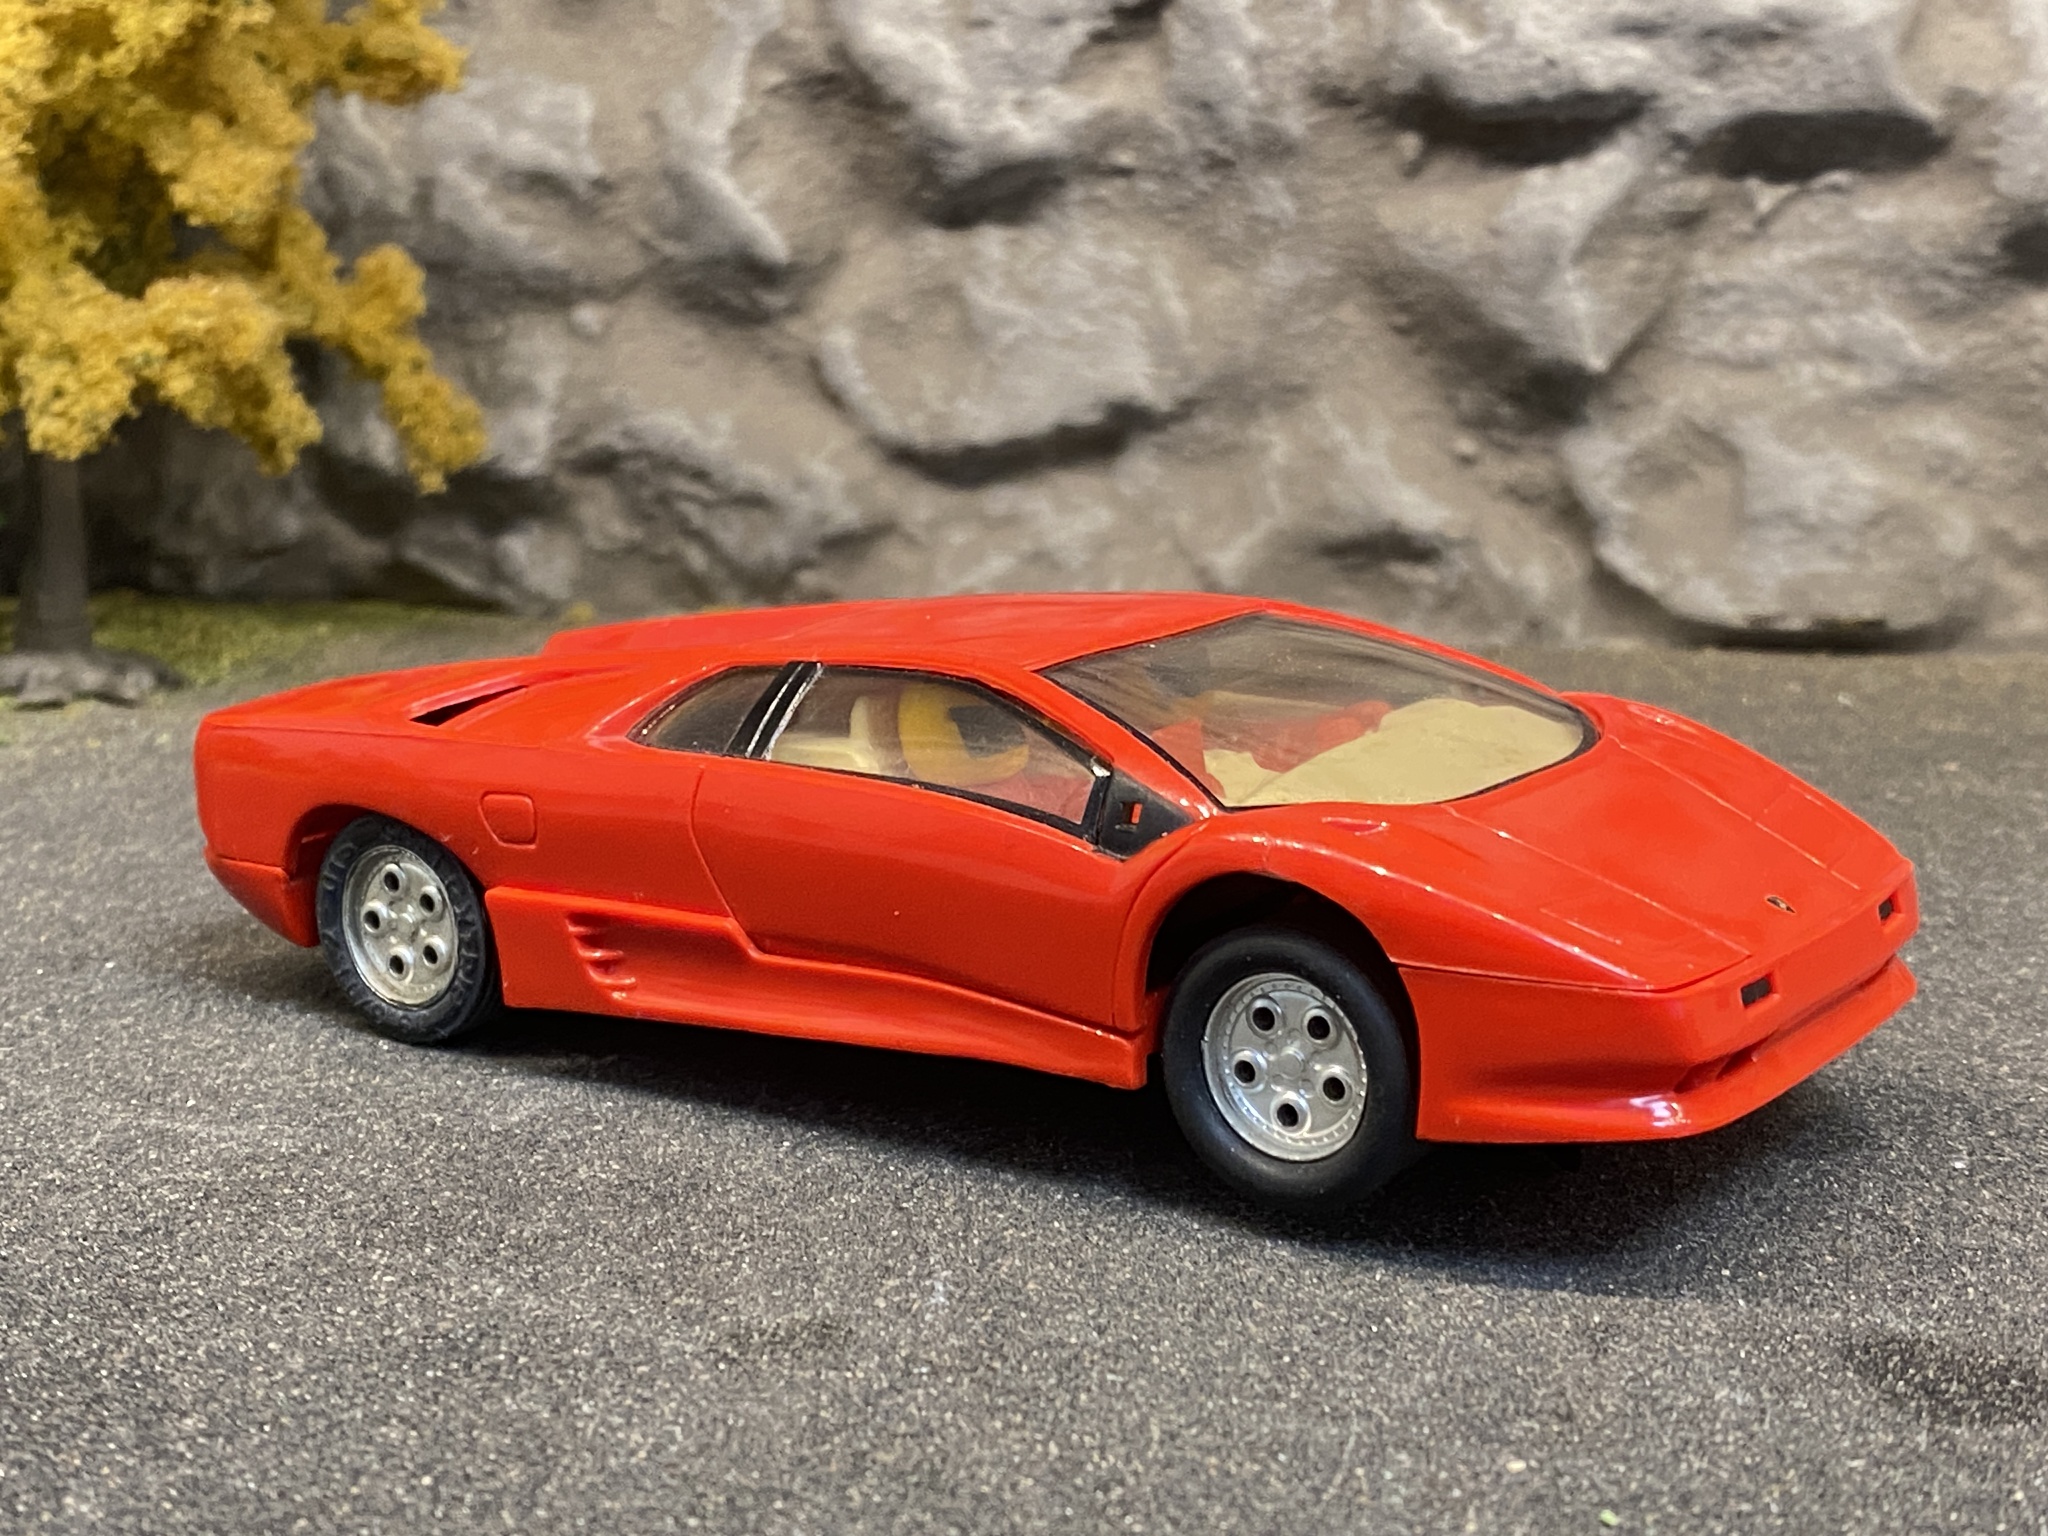 Skala 1/32 Begagnad/Used Analoge slotcar: Lamborghini Diablo, red fr Scalextric